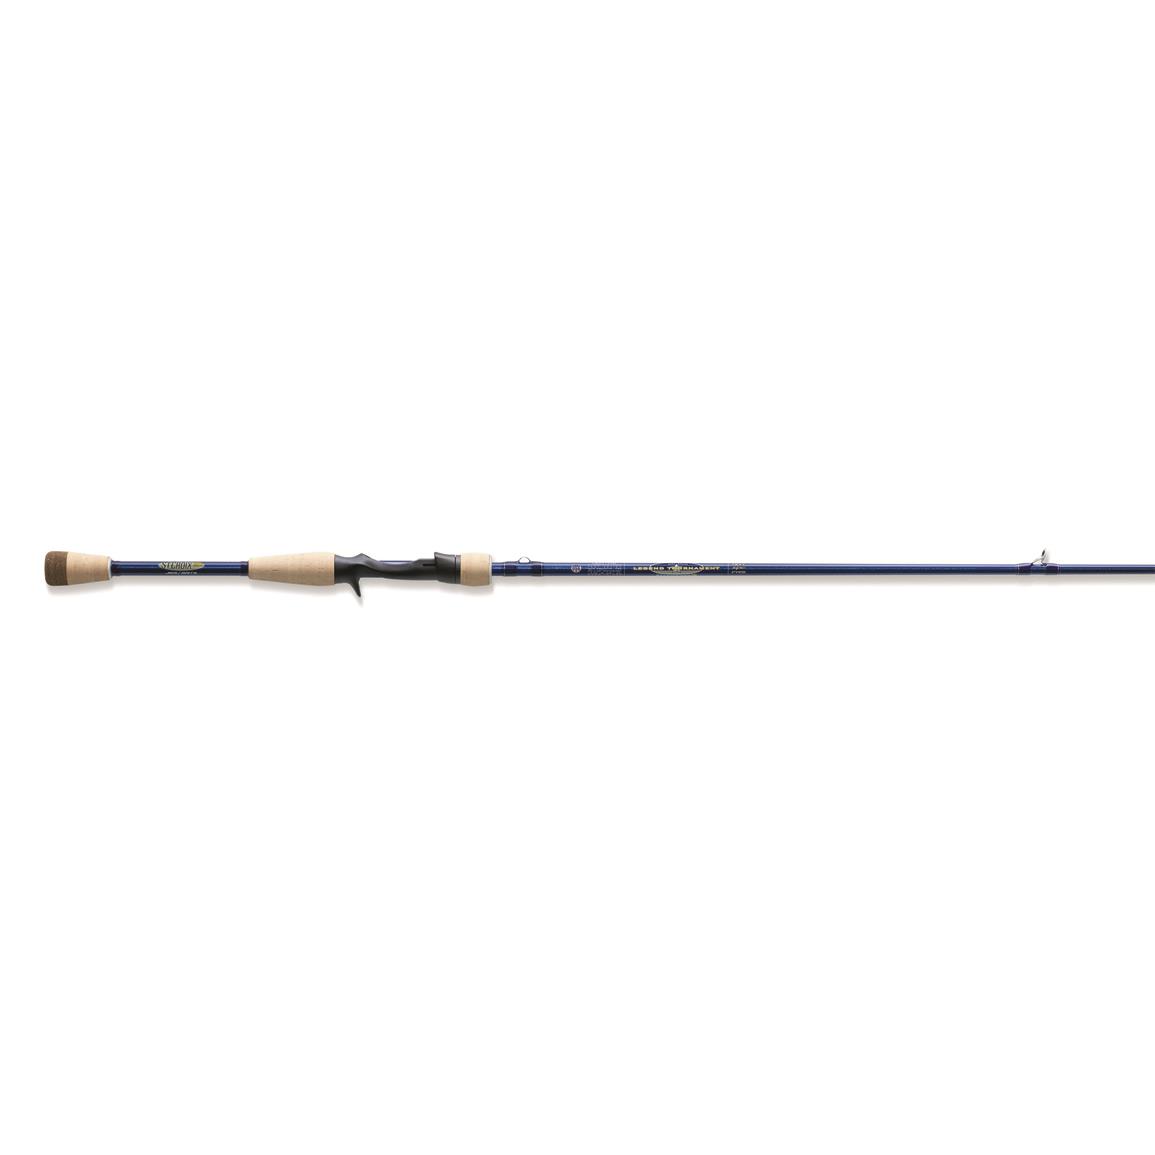 St. Croix Legend Tournament Bass Casting Rod, 7'1" Length, Medium Heavy Power, Fast Action